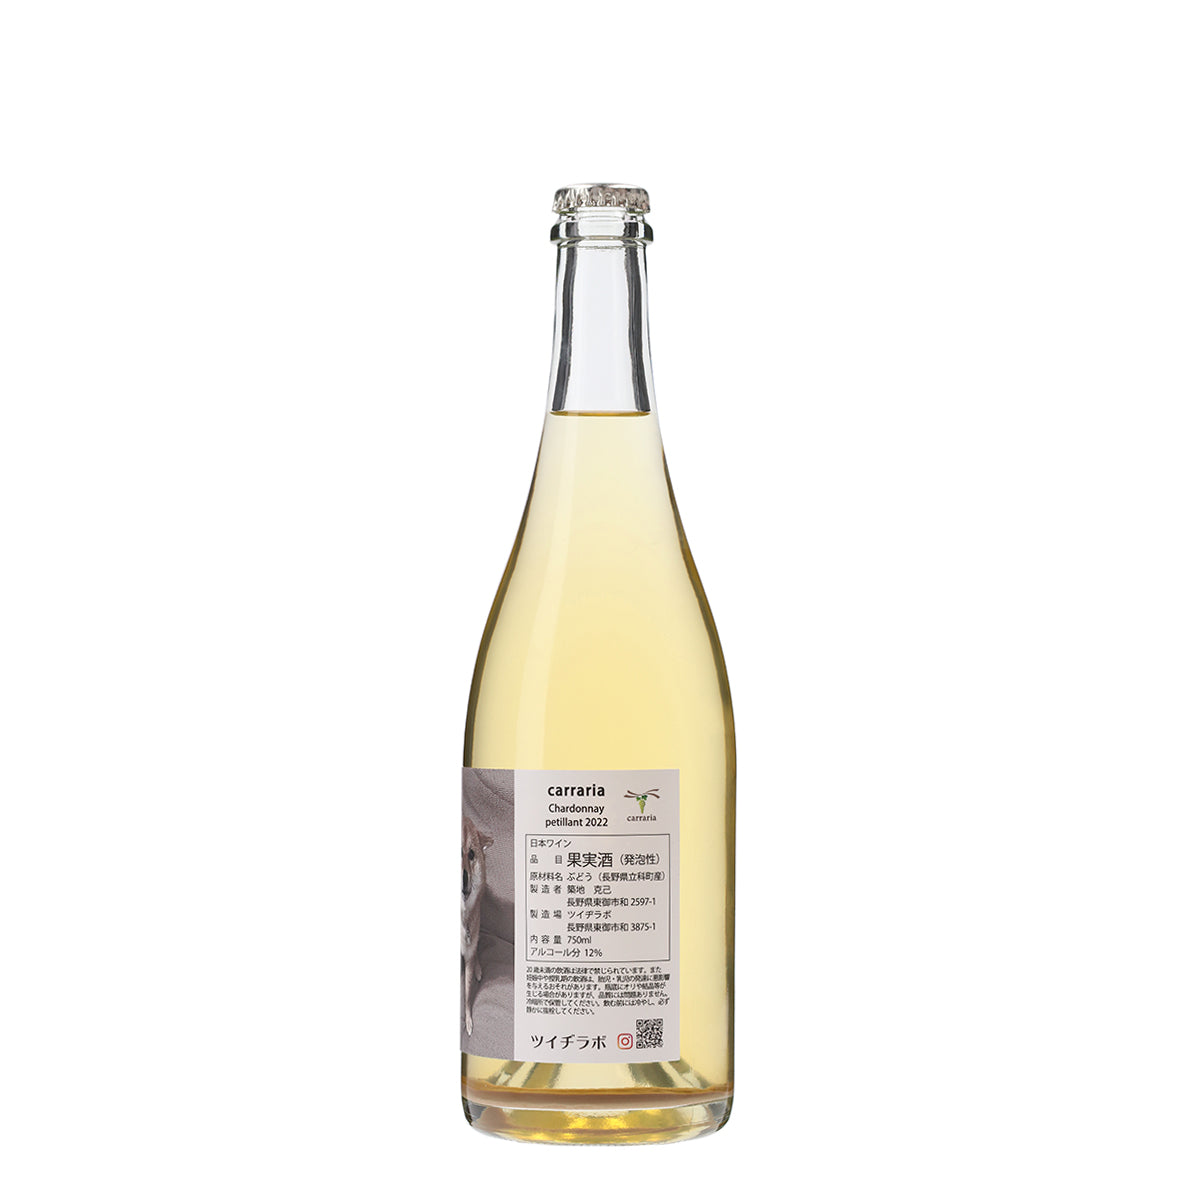 wa-syu限定】carraria Chardonnay petillant 2022 /ツイヂラボ